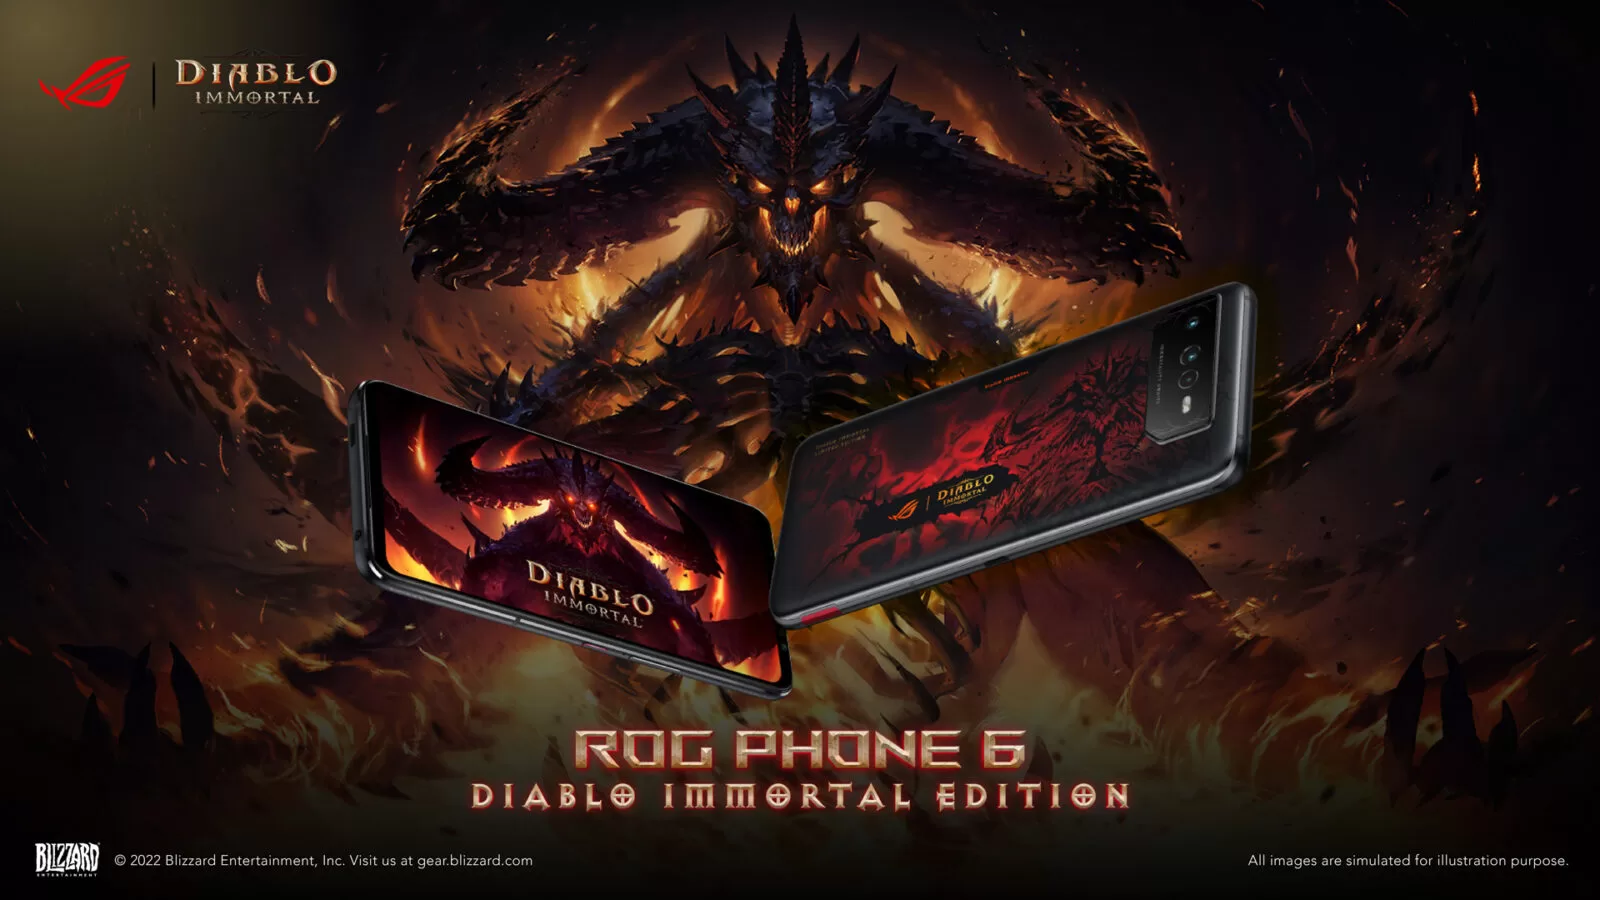 image001 | ASUS Republic of Gamers | เปิดตัว ROG Phone 6 รุ่นลิมิเต็ดในธีม Diablo Immortal Edition